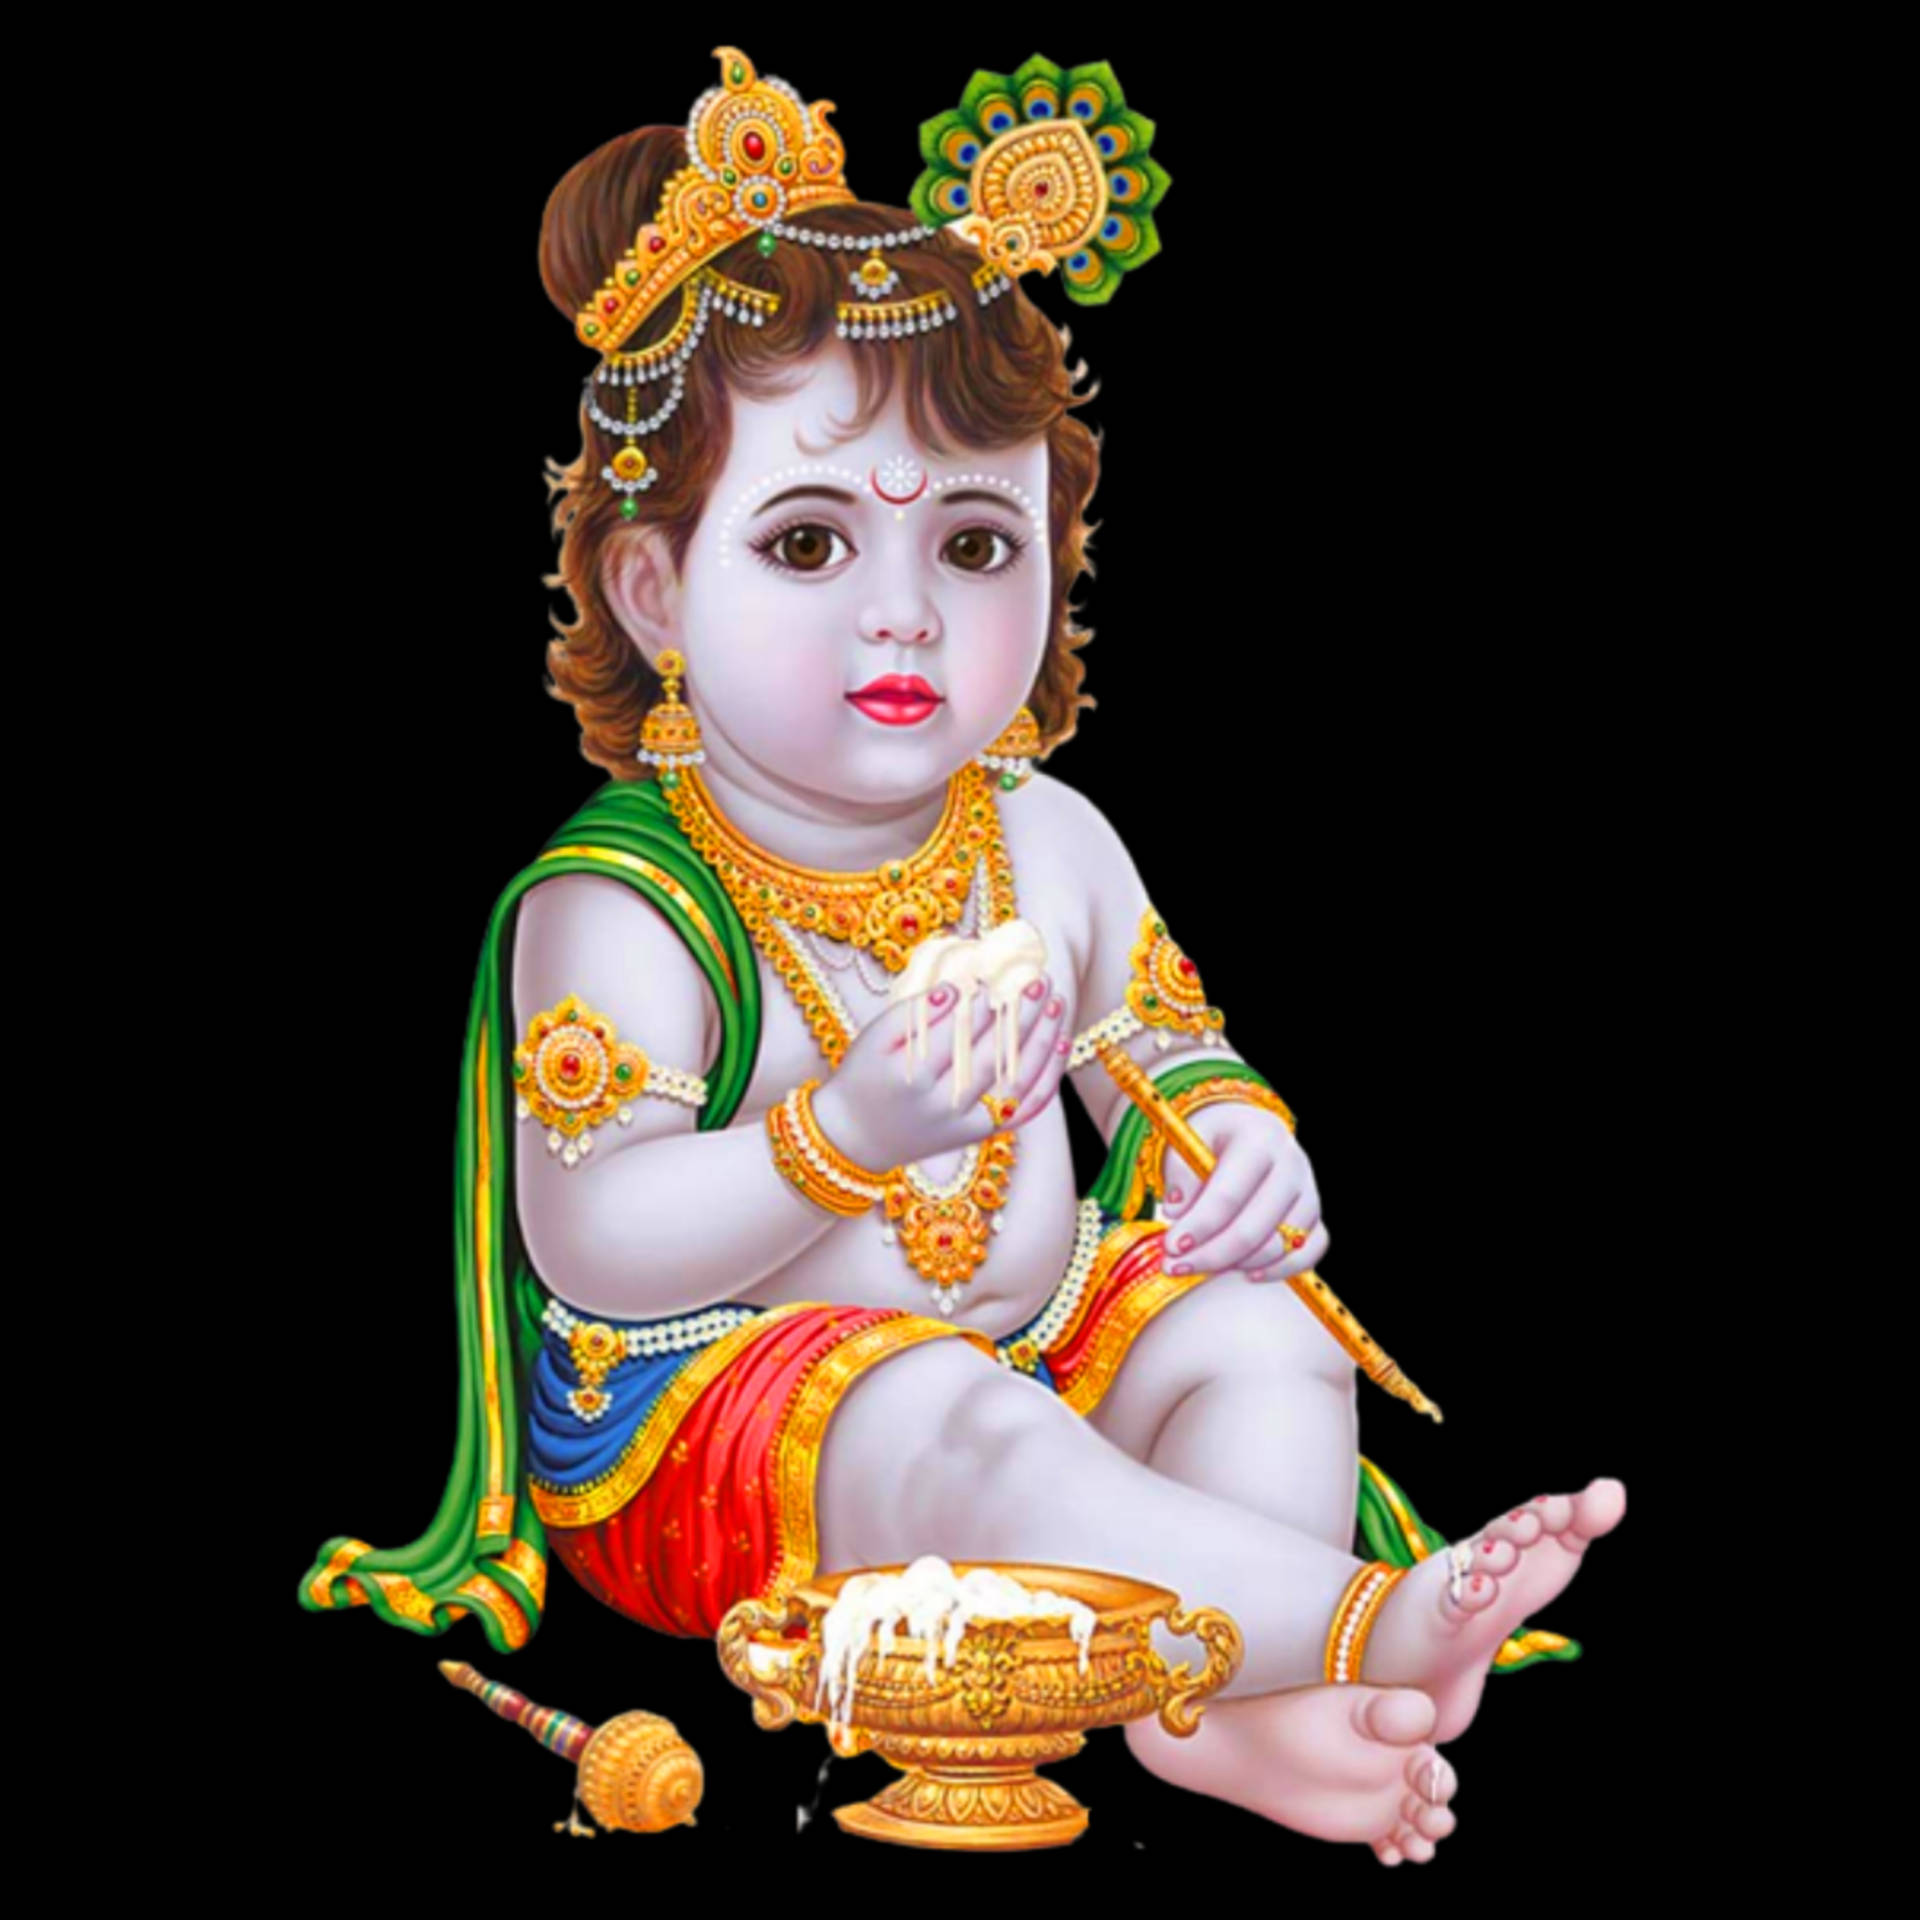 Divine Innocence - Breathtaking Image Of Bal Krishna